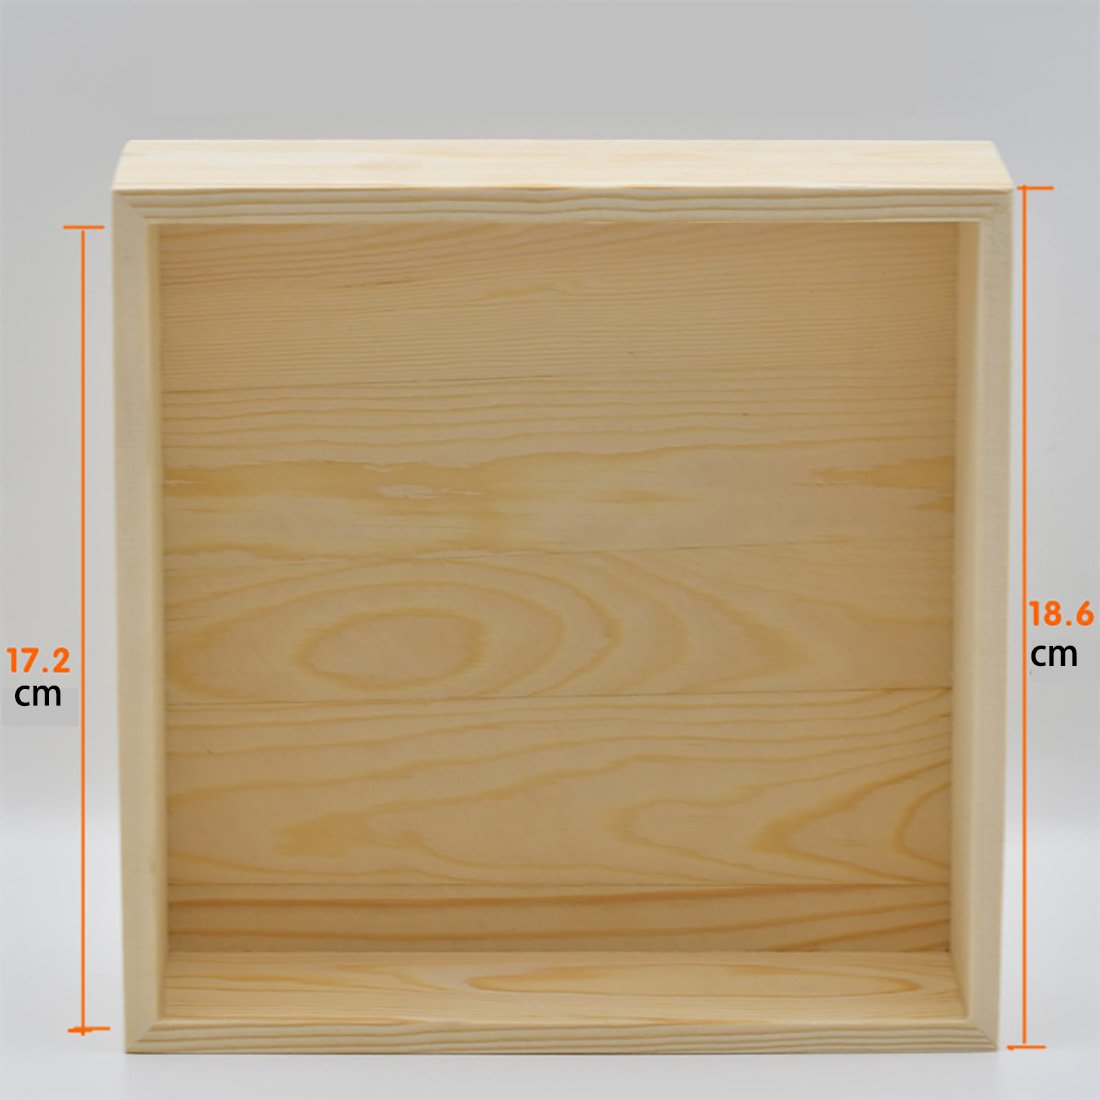 Wooden 9pcs 3x3 Cube Pattern Storage Box